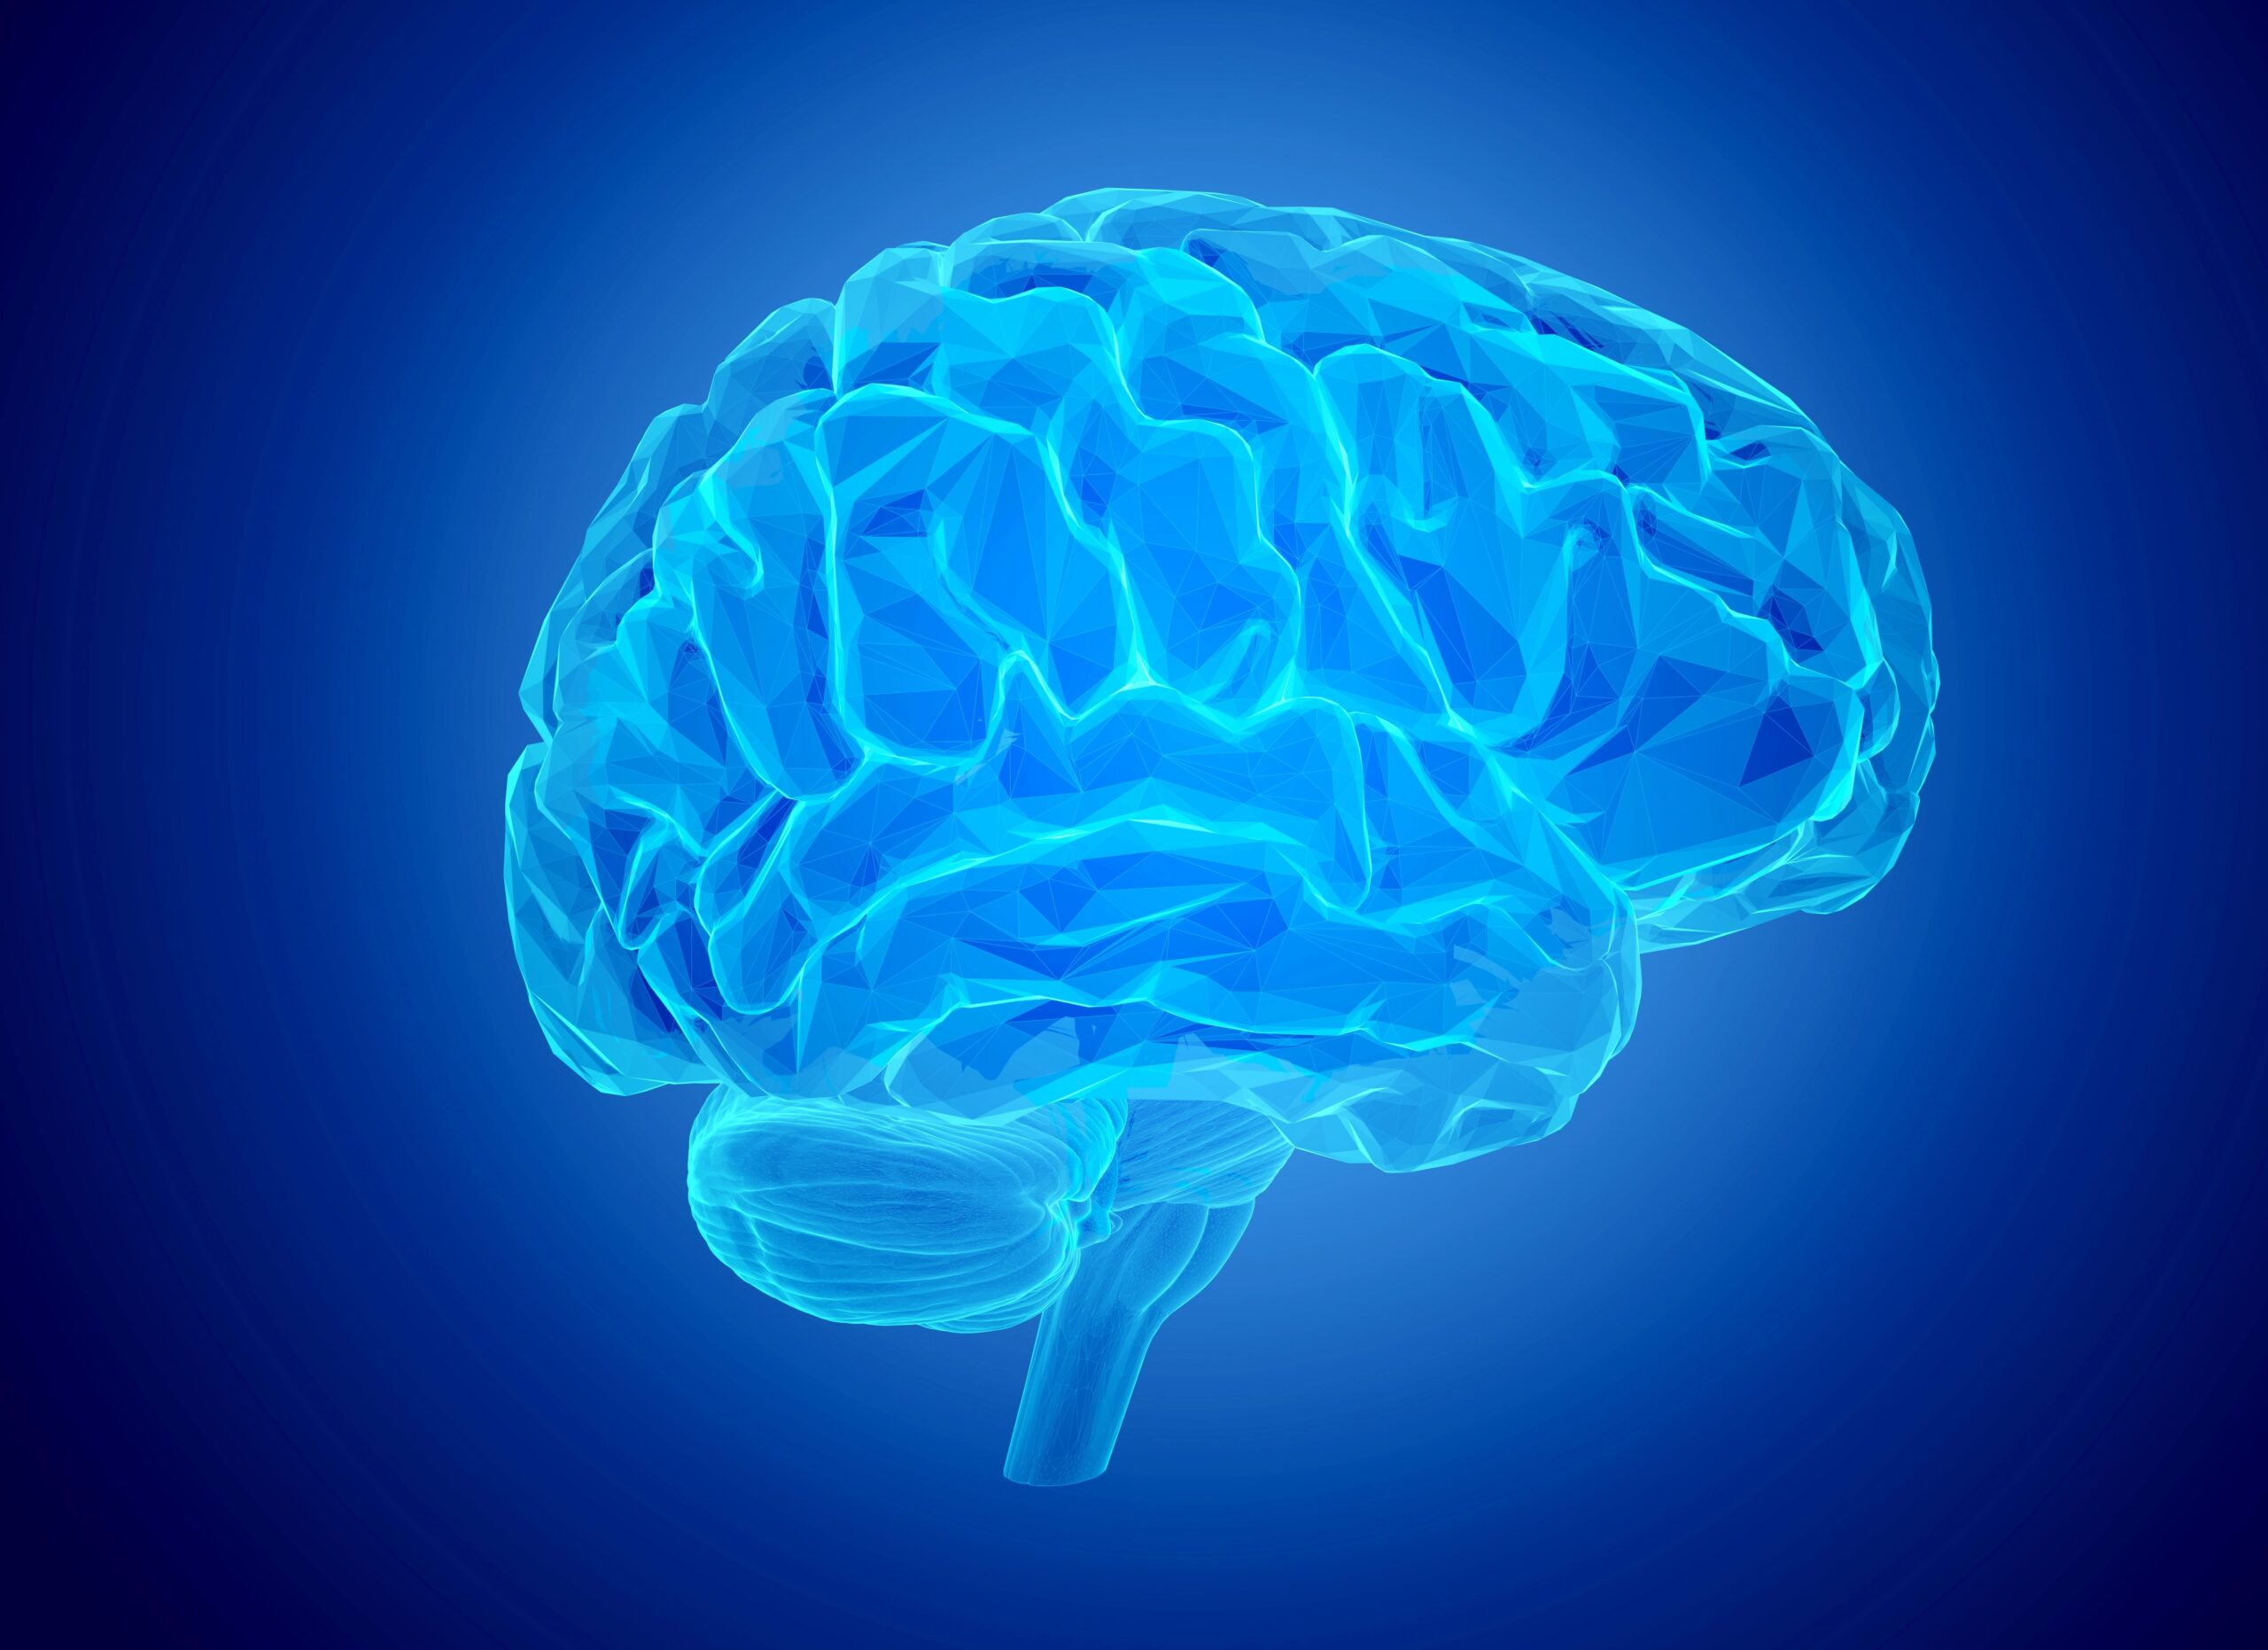 Digital illustration of human brain on blue background